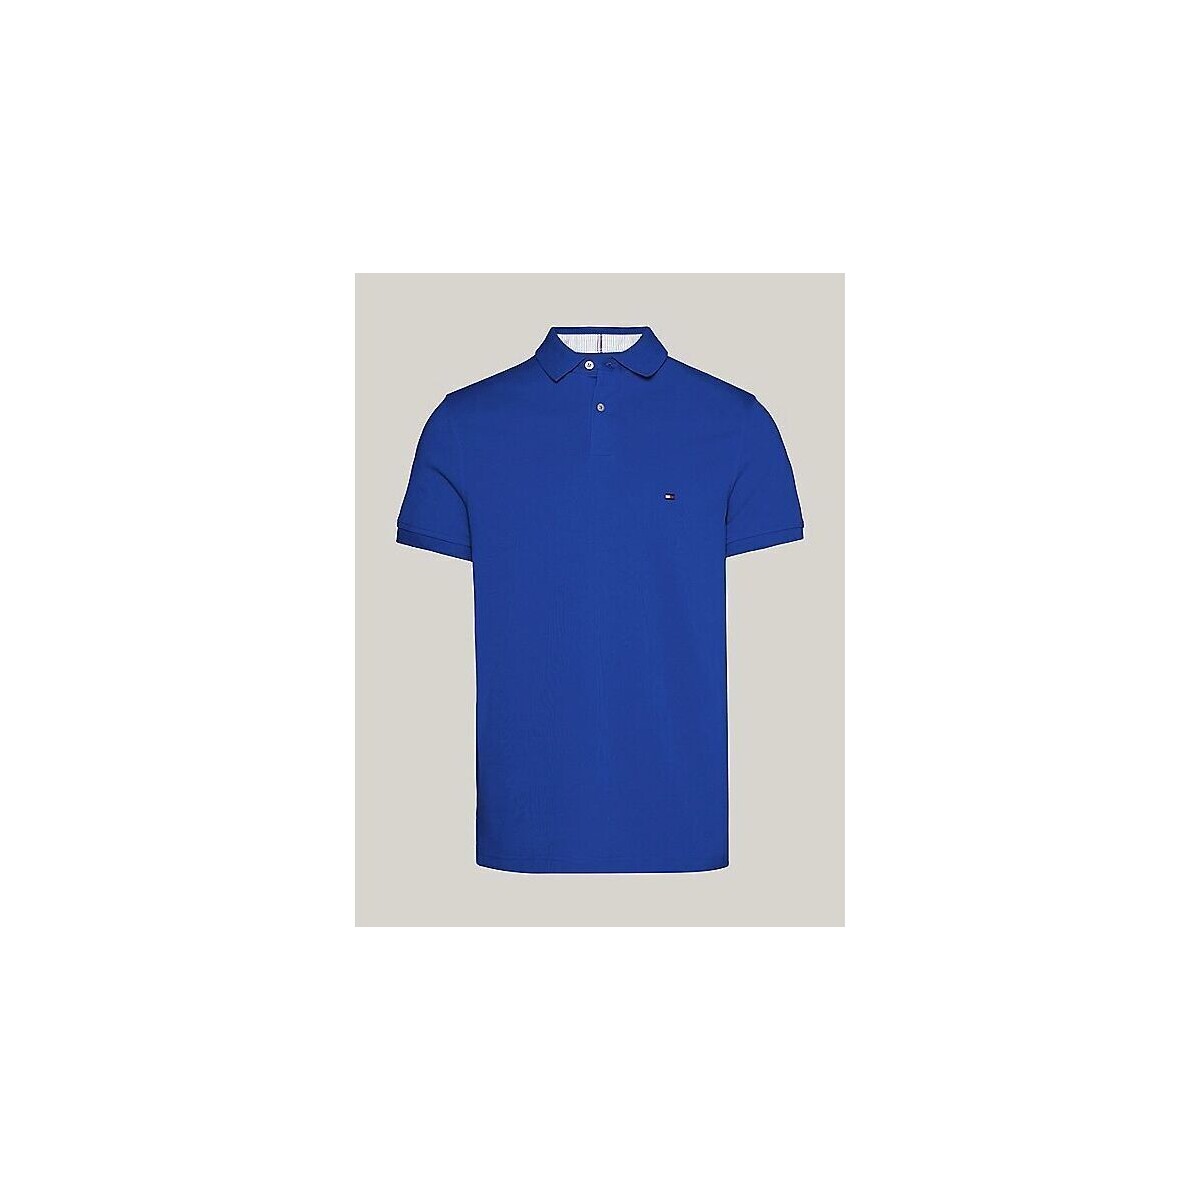 Kleidung Herren T-Shirts & Poloshirts Tommy Hilfiger MW0MW17770 - 1985 REGULAR POLO-C66 ULTRA BLUE Blau